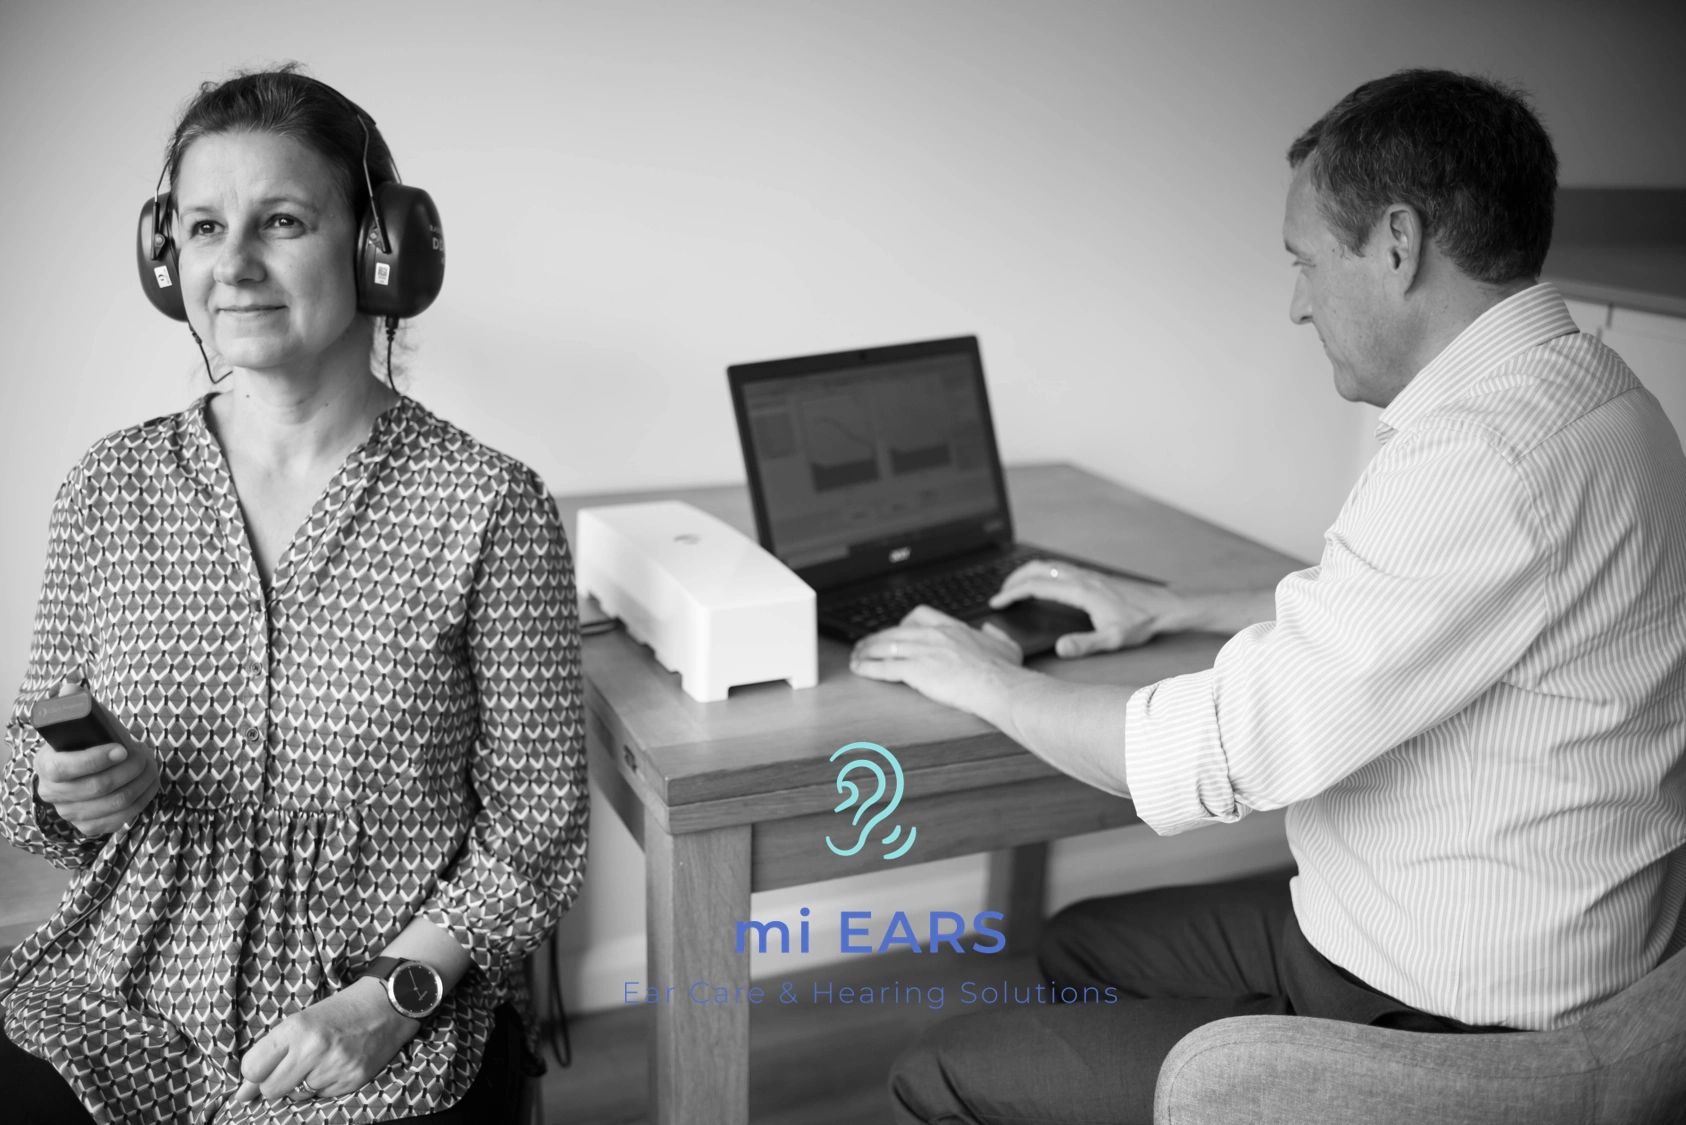 mi EARS Audiologists in Aldershot Diagnostic Audiometry Hearing Test